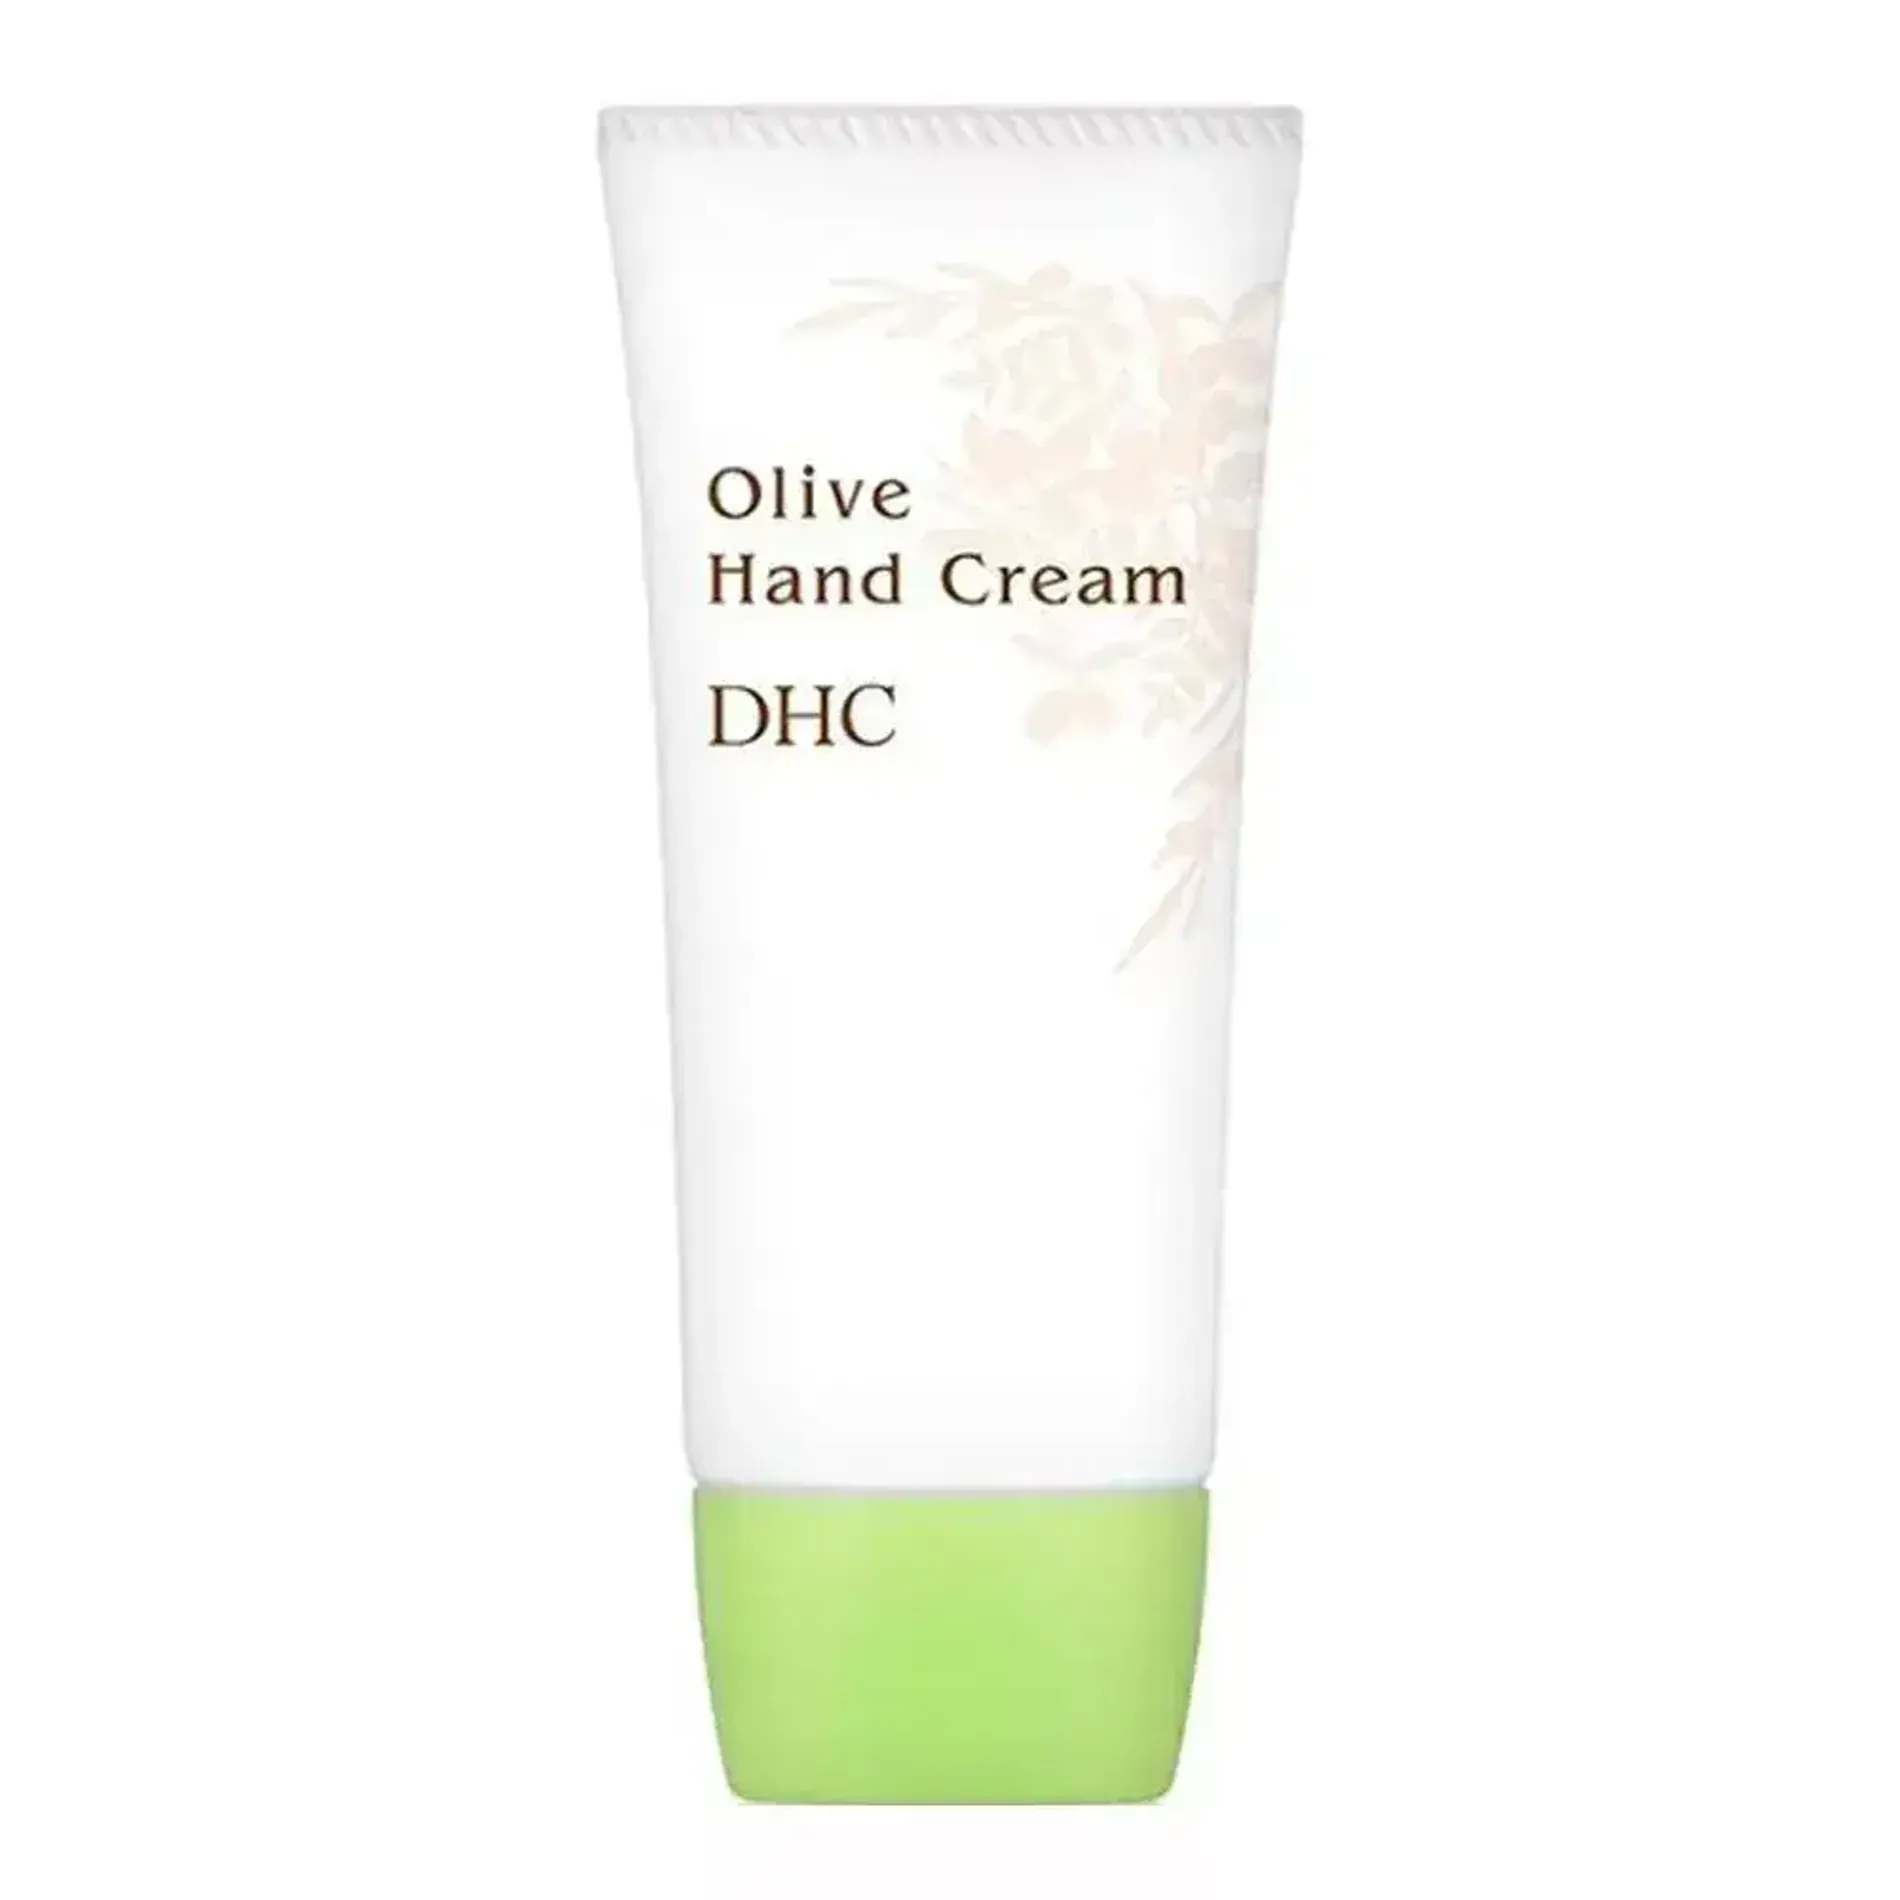 kem-duong-da-tay-dhc-olive-hand-cream-55g-1